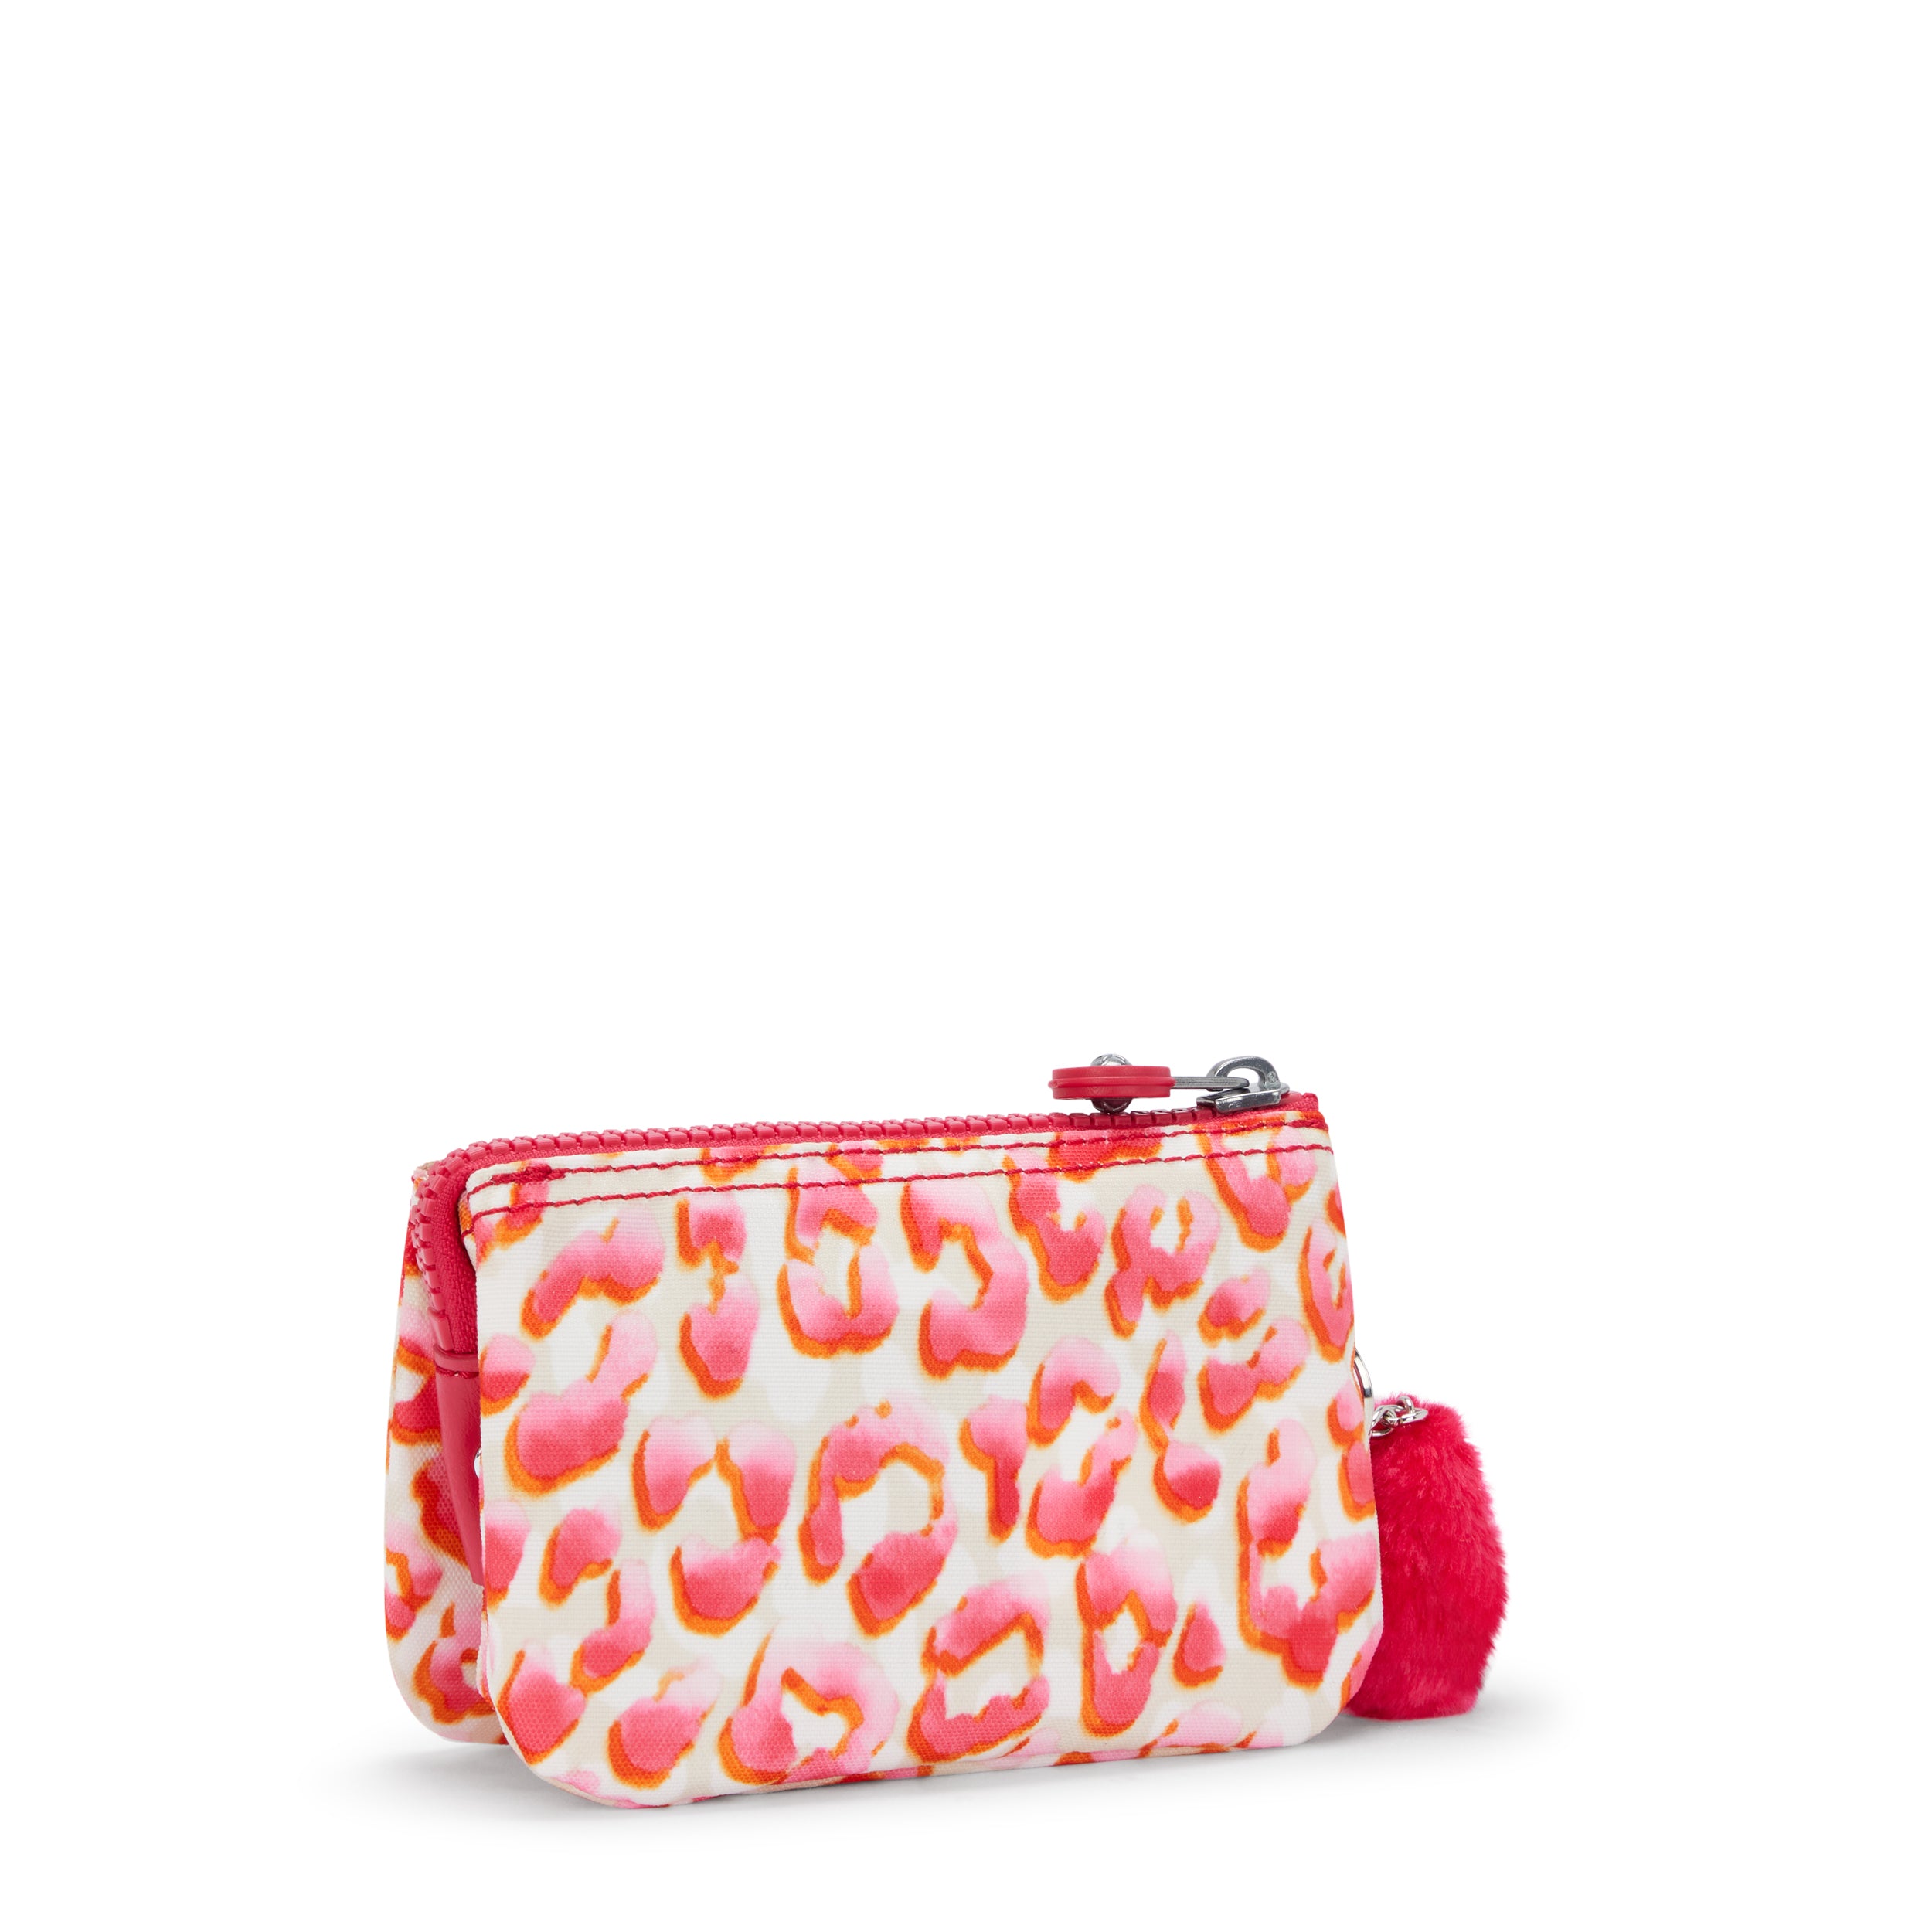 KIPLING-Creativity S-Small purse-Latin Cheetah-I5159-6LX